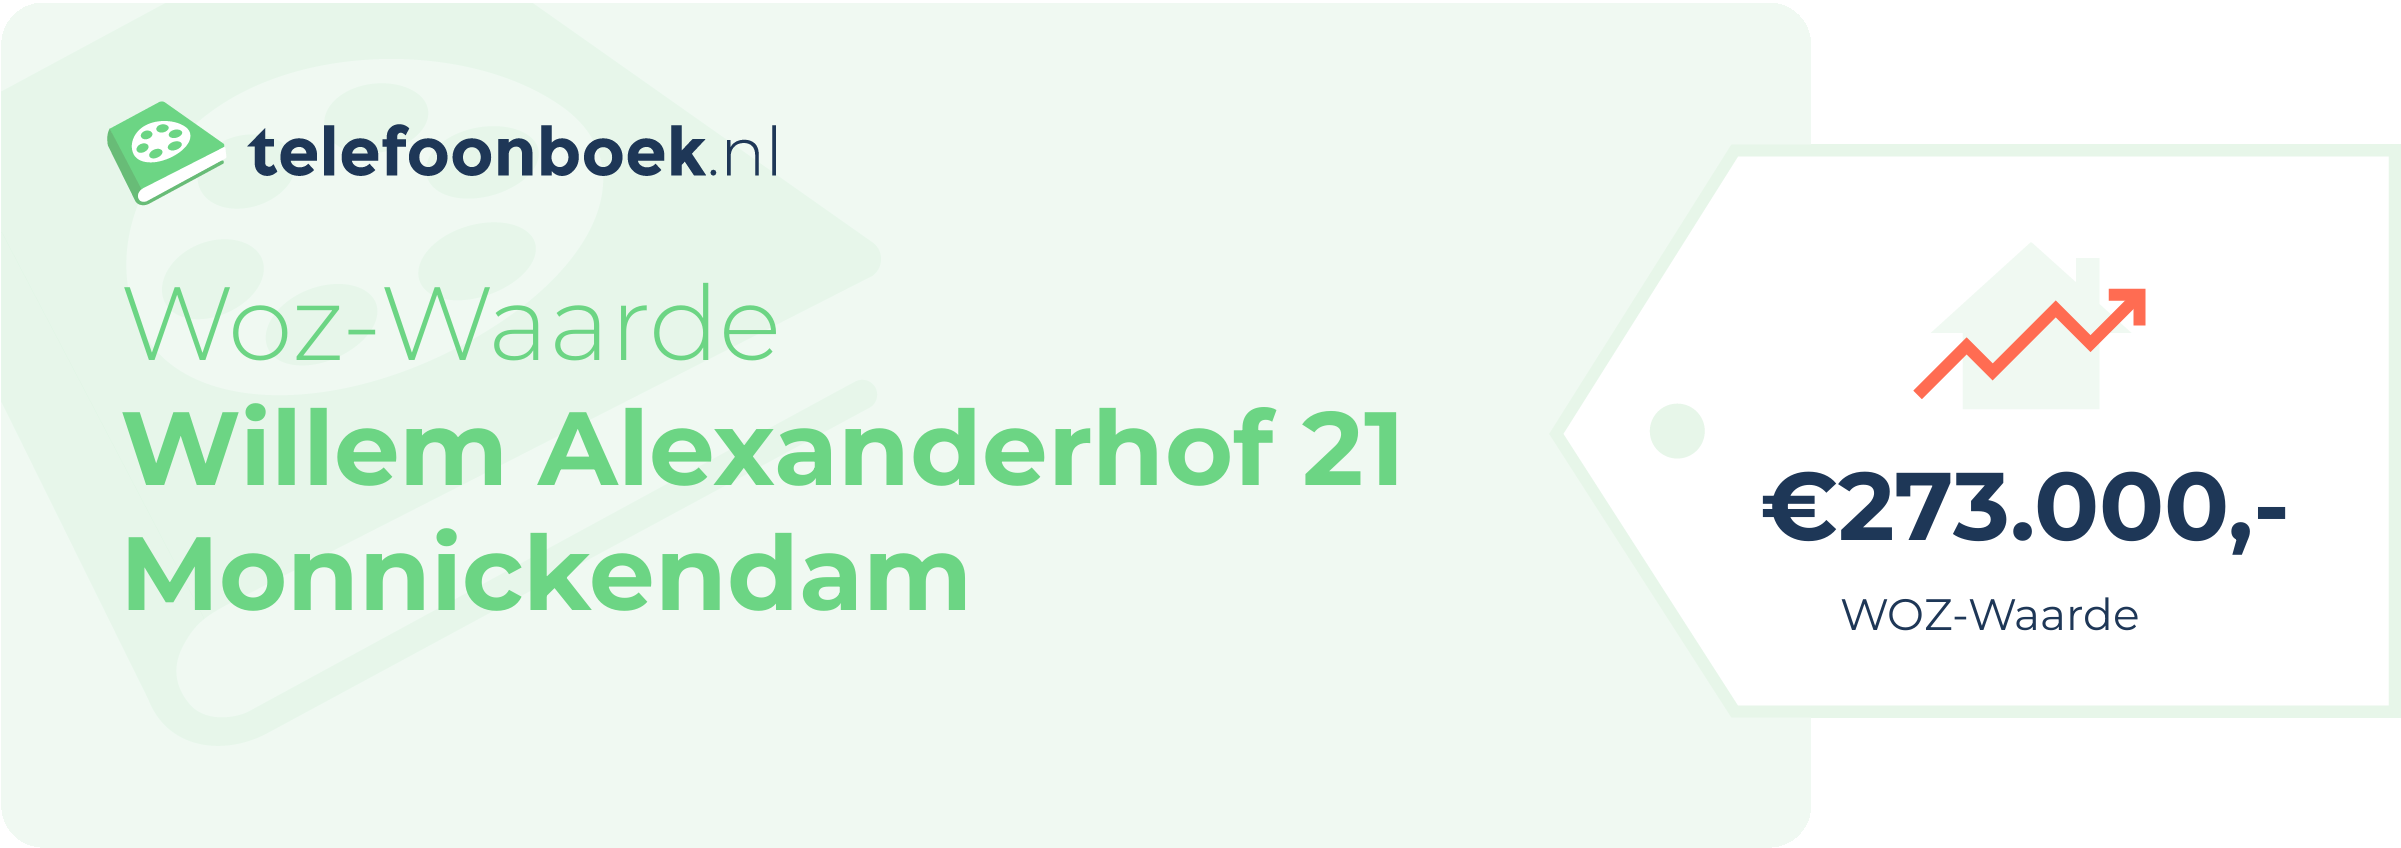 WOZ-waarde Willem Alexanderhof 21 Monnickendam